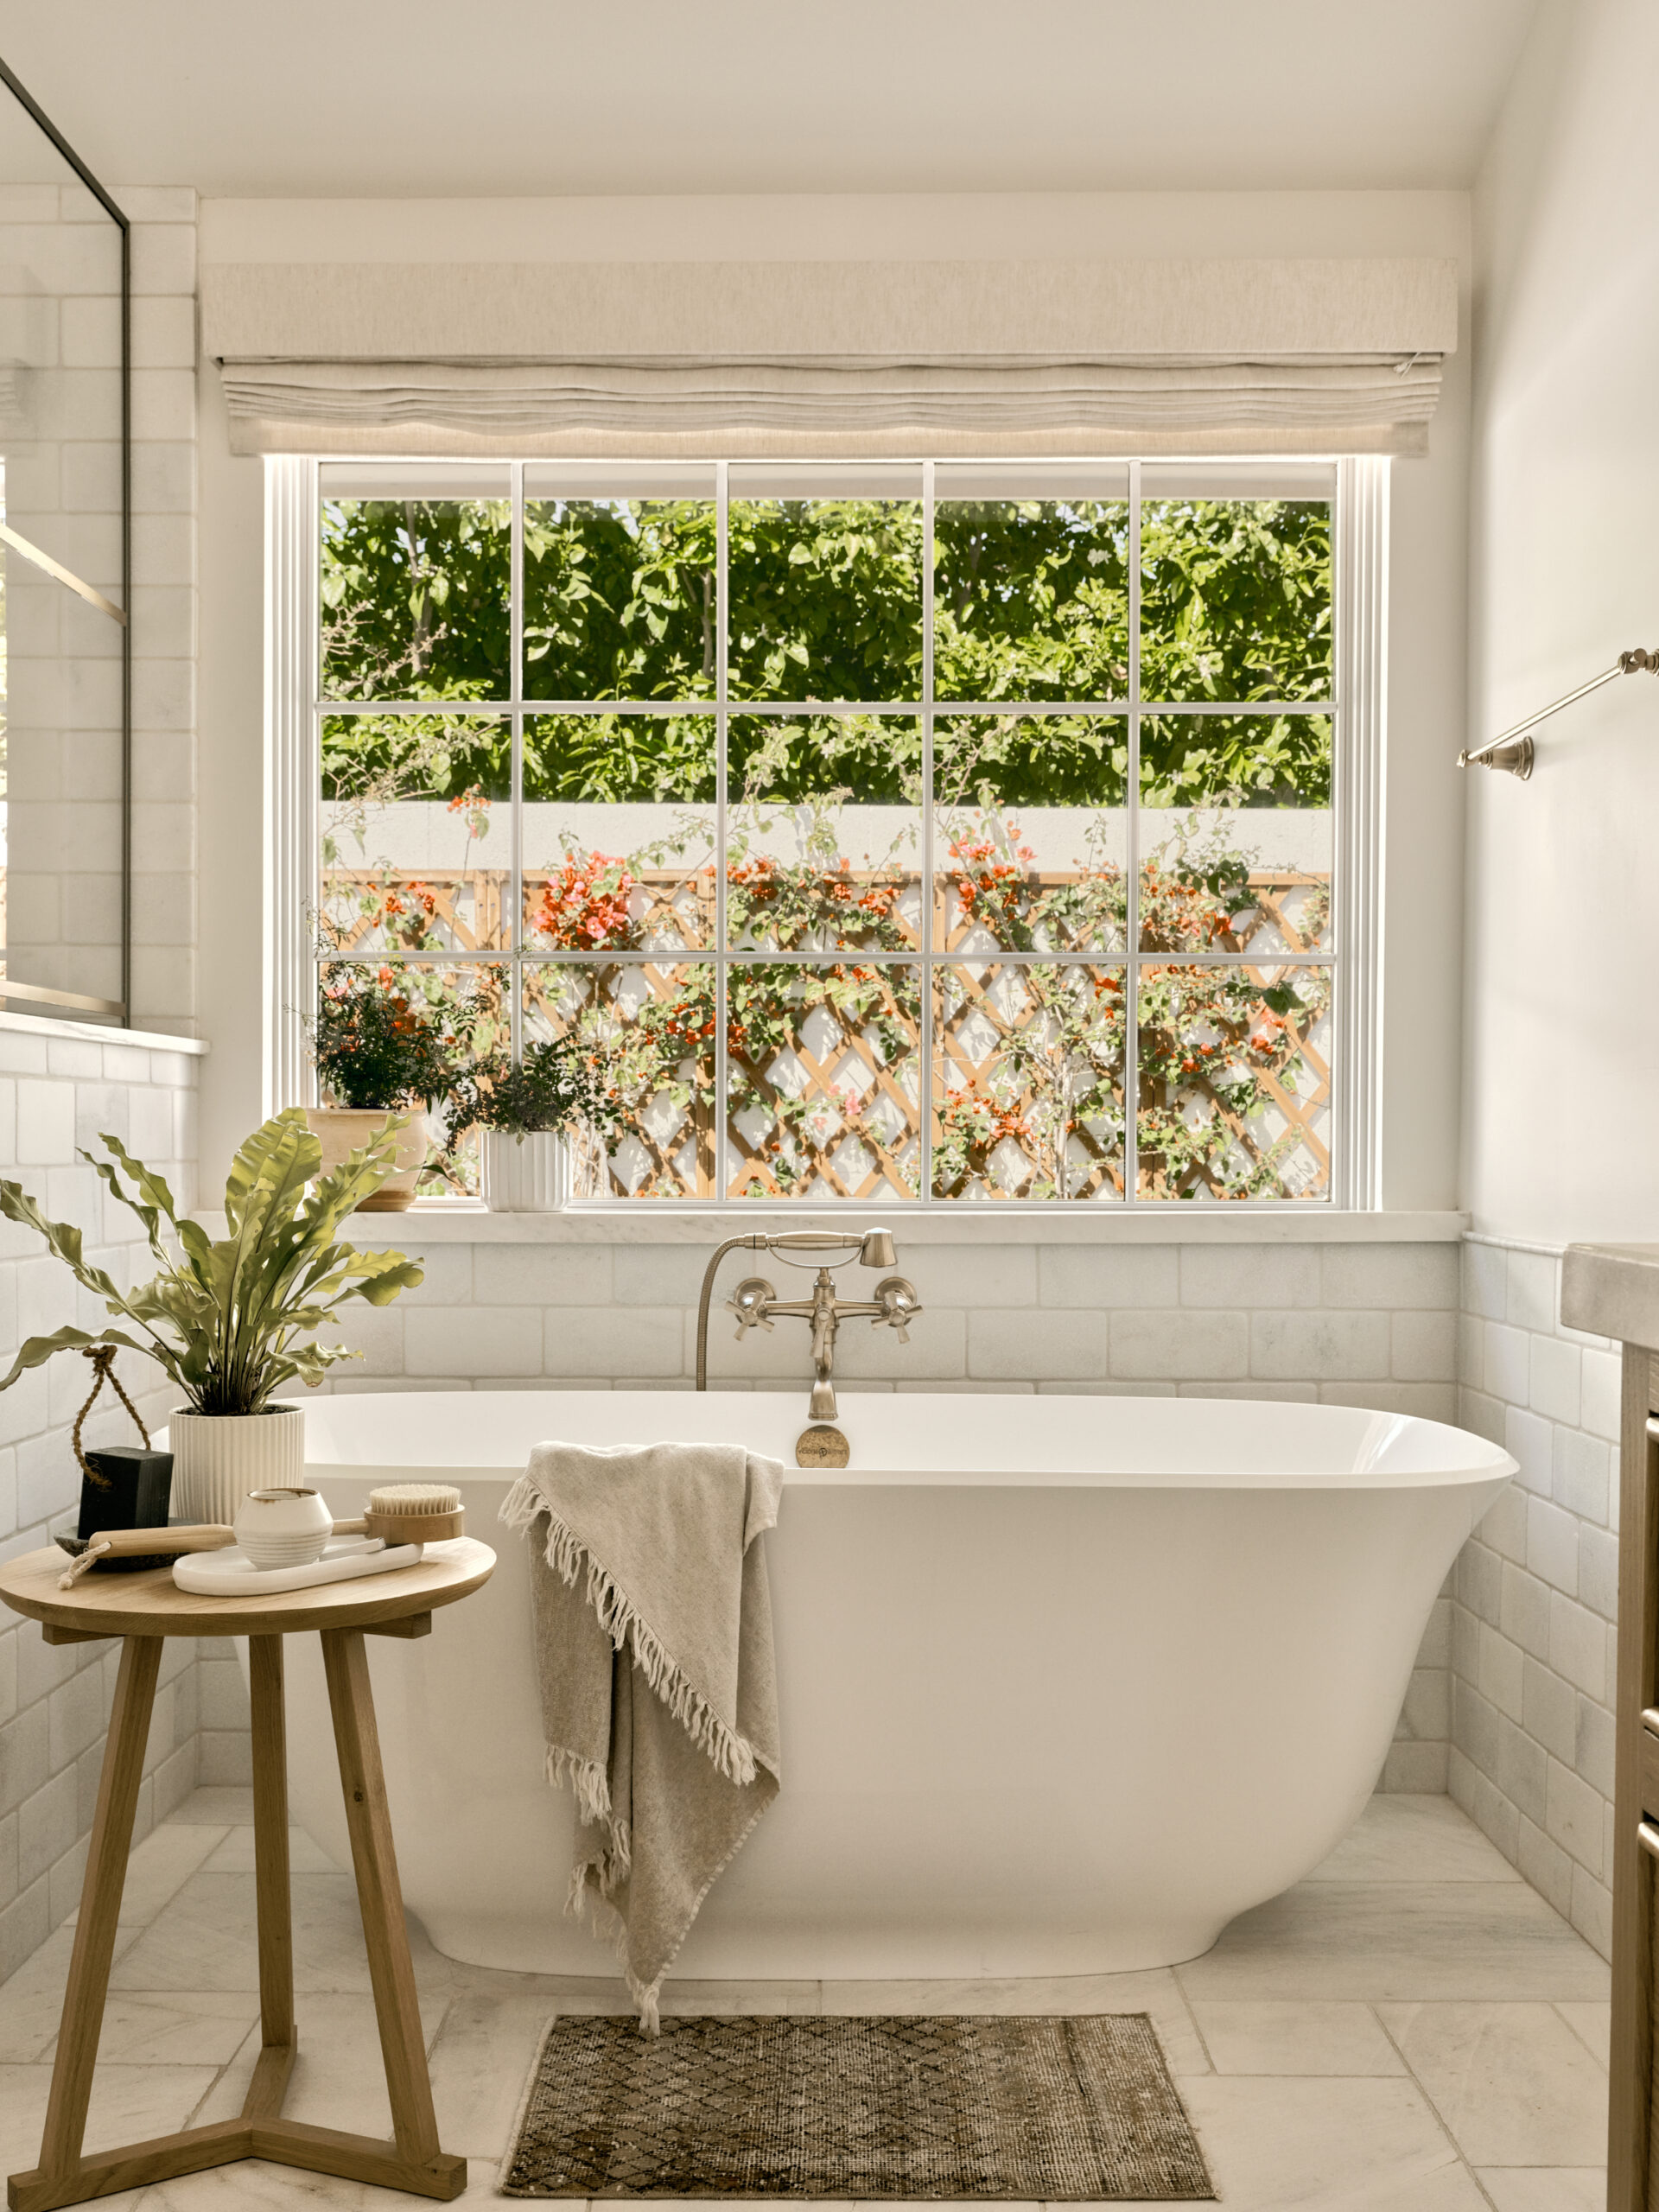 Rafterhouse Interior Design - Modern designed bathroom with deep soaking tub